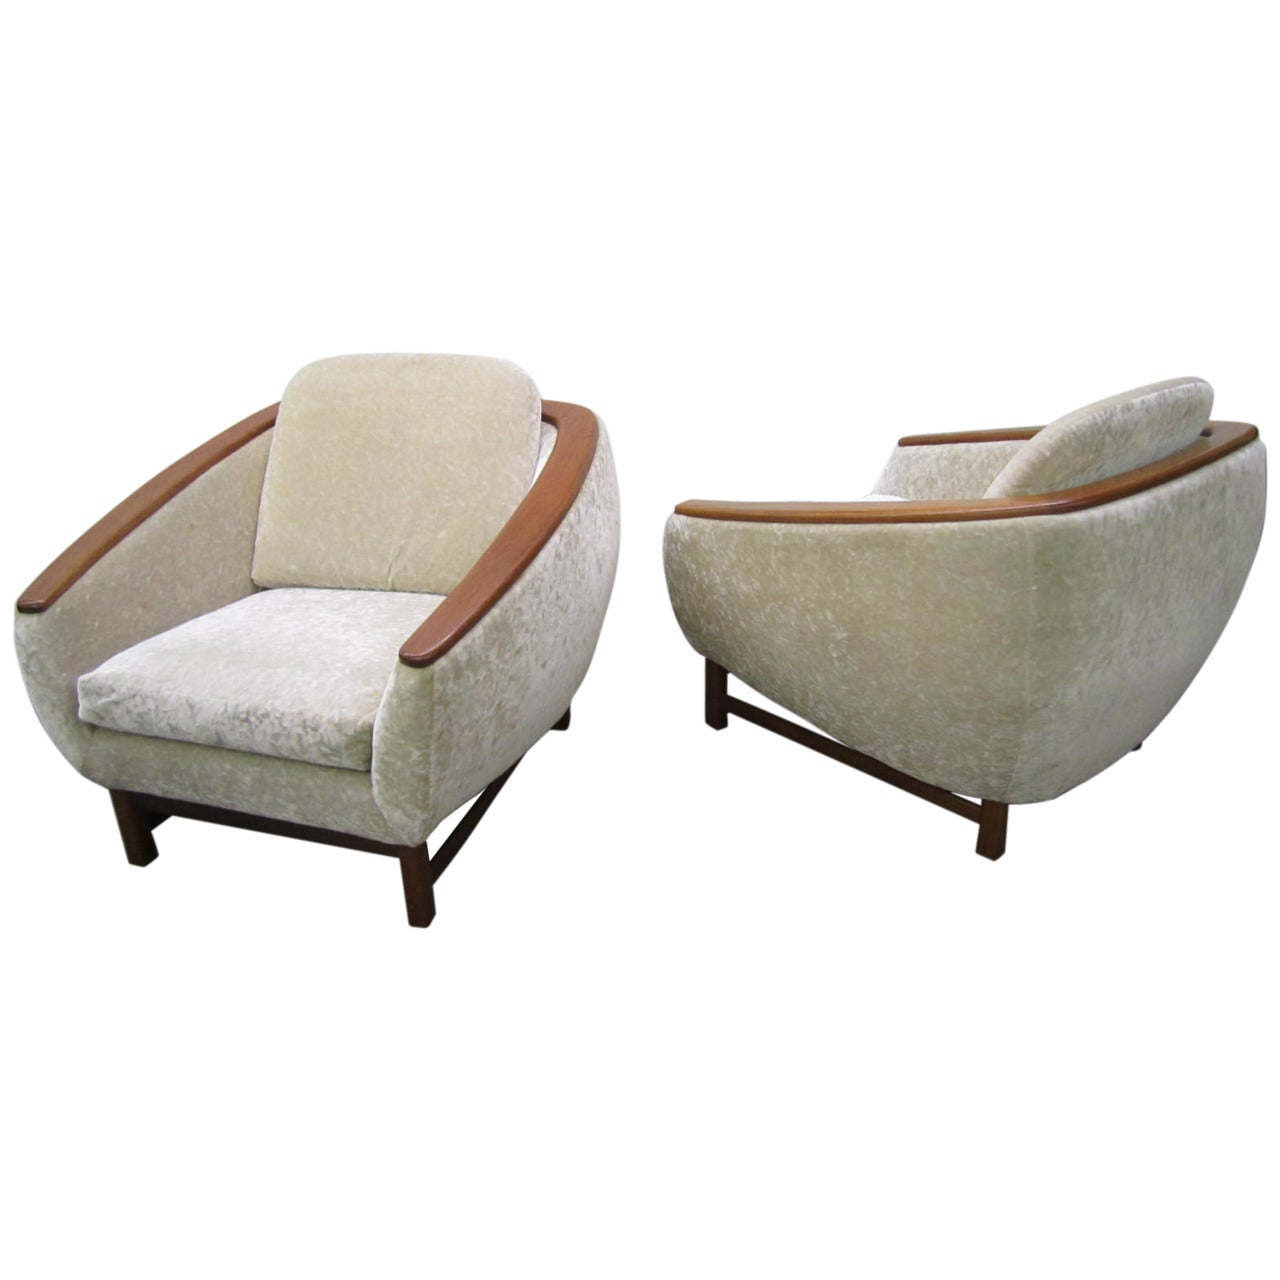 Pair of Mid-Century Modern Huber Teak-Arm Lounge Chairs